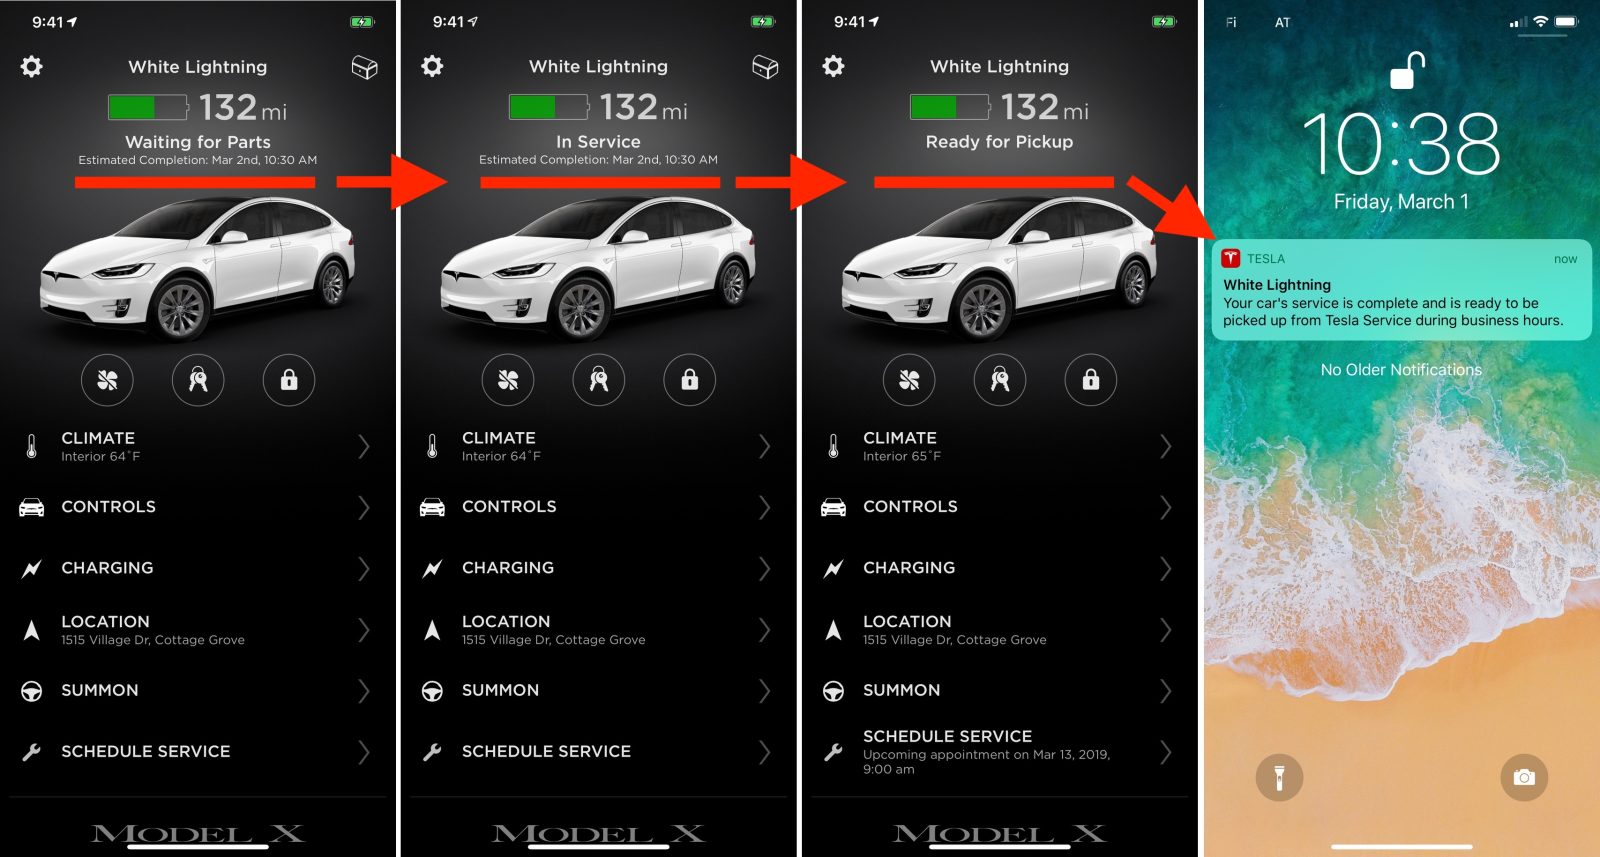 Tesla Service Update App